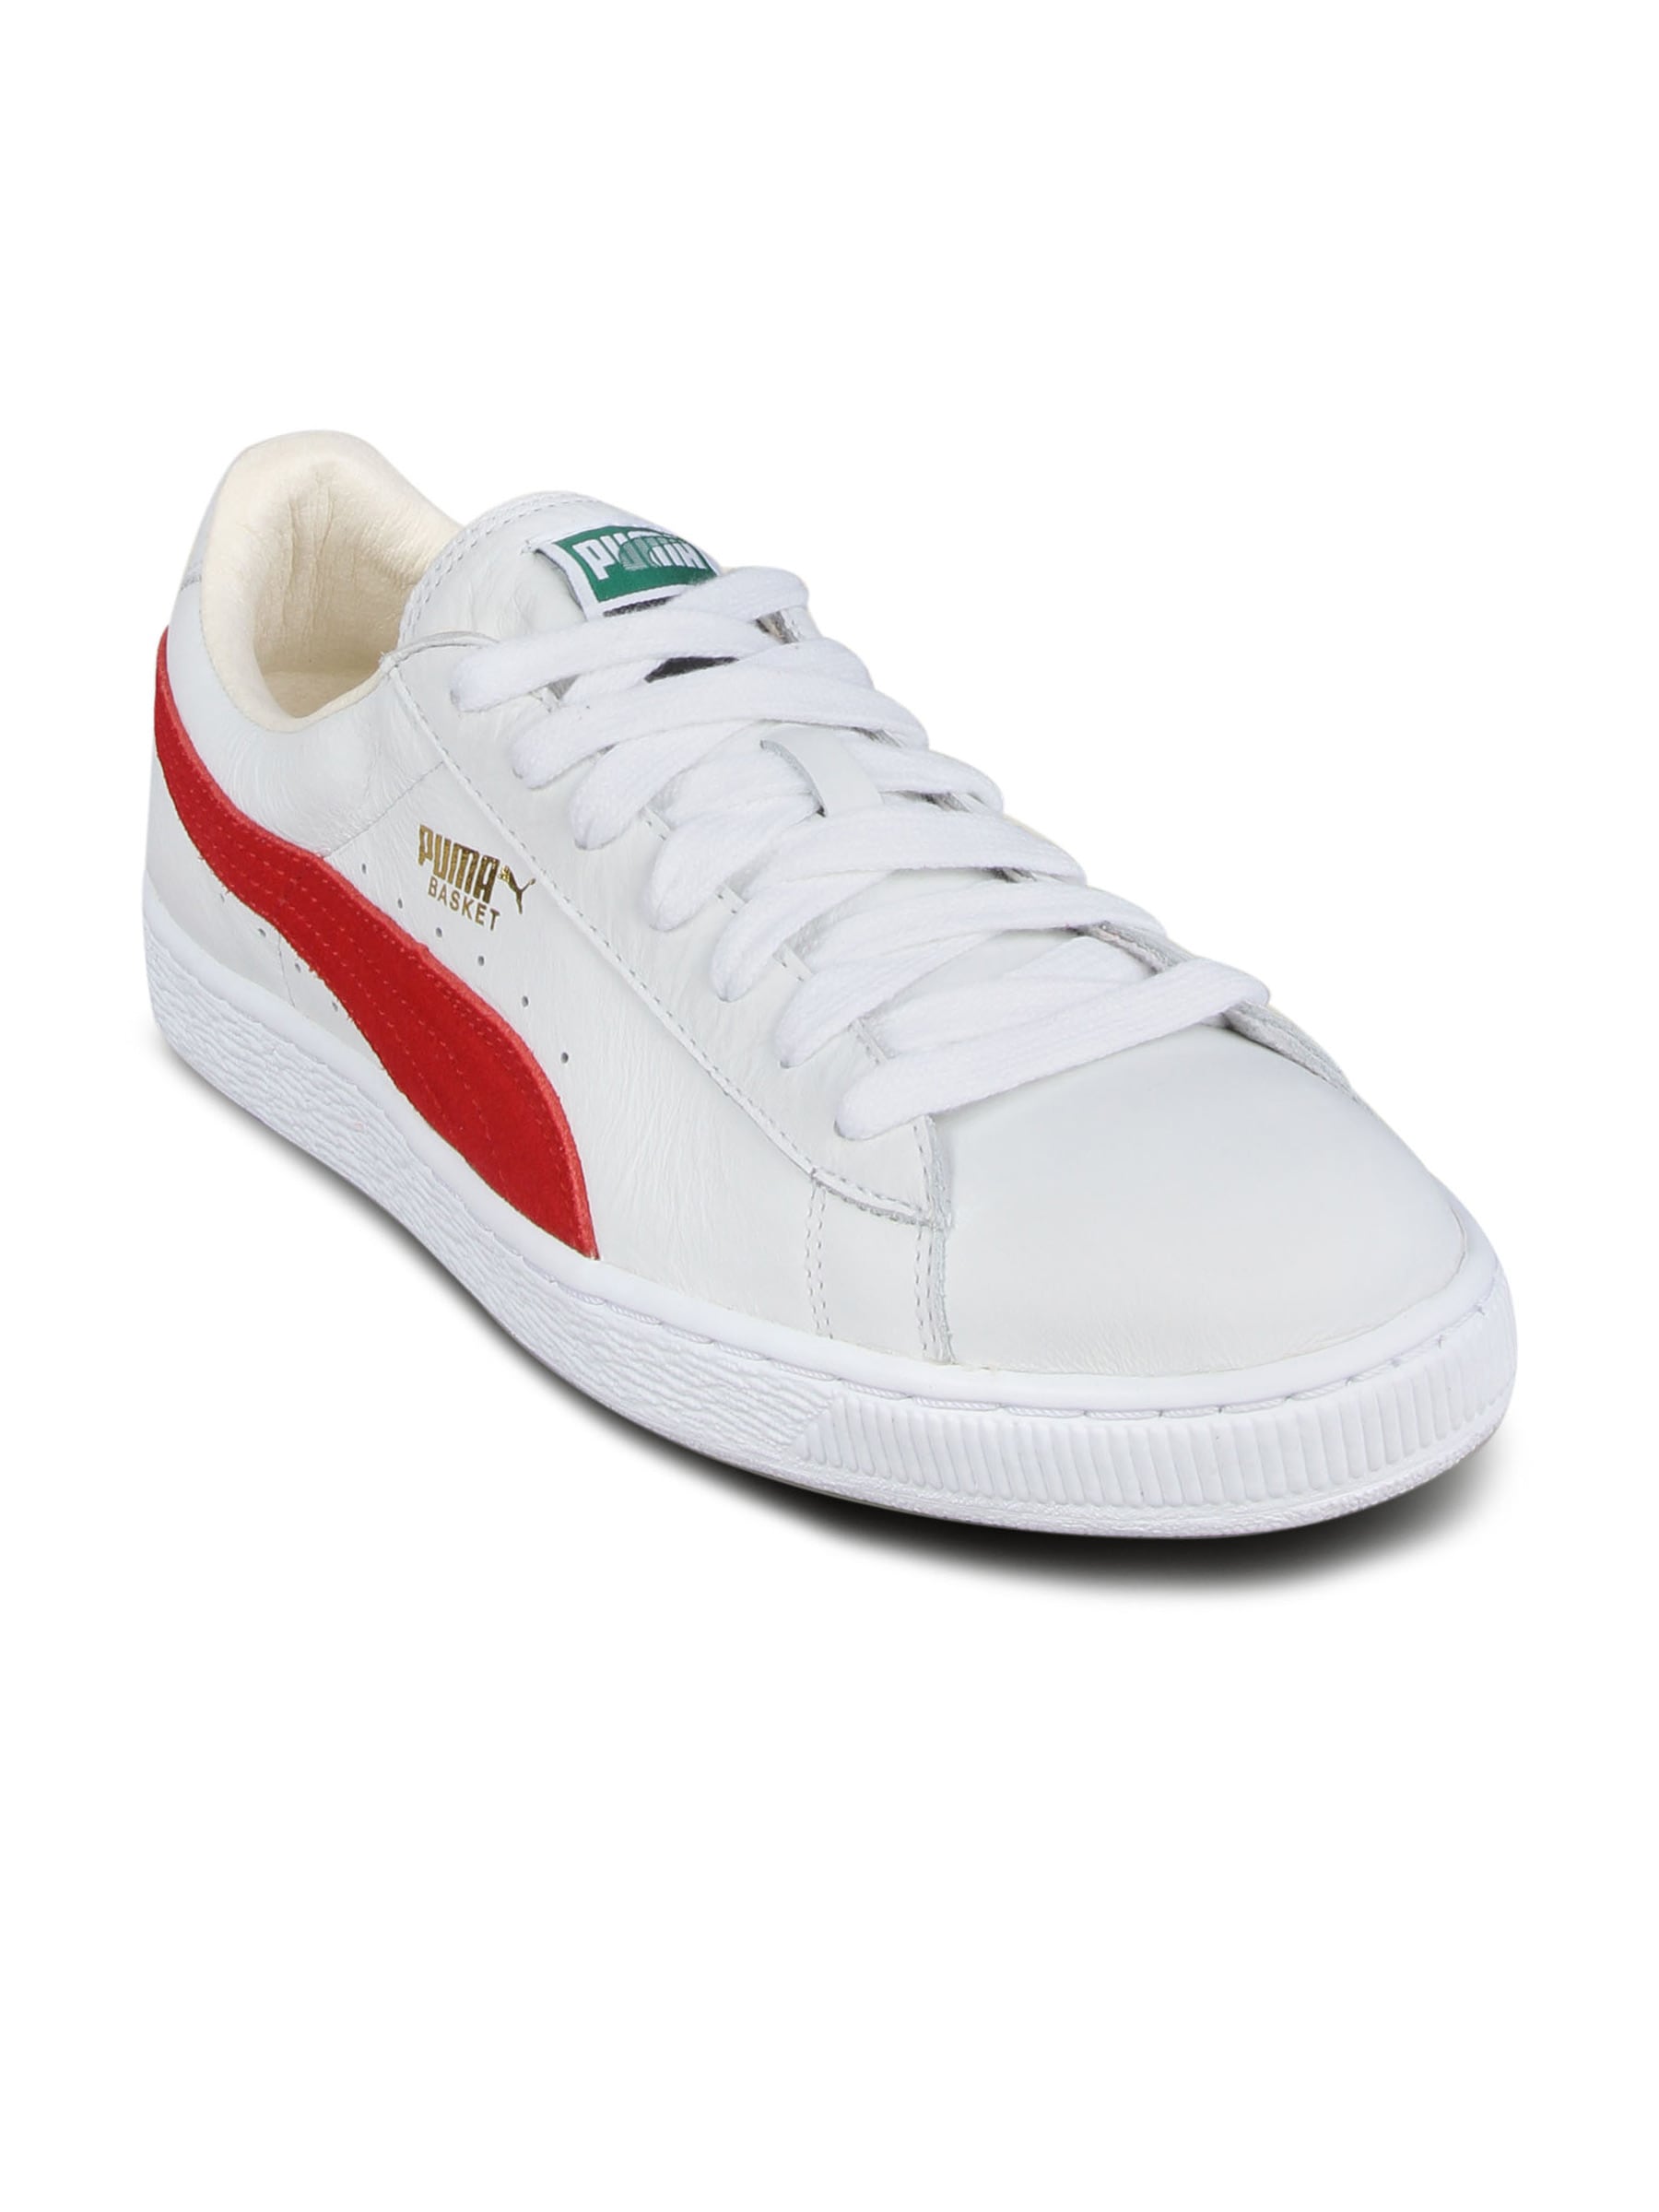 Puma Men's Basket White Red Shoe